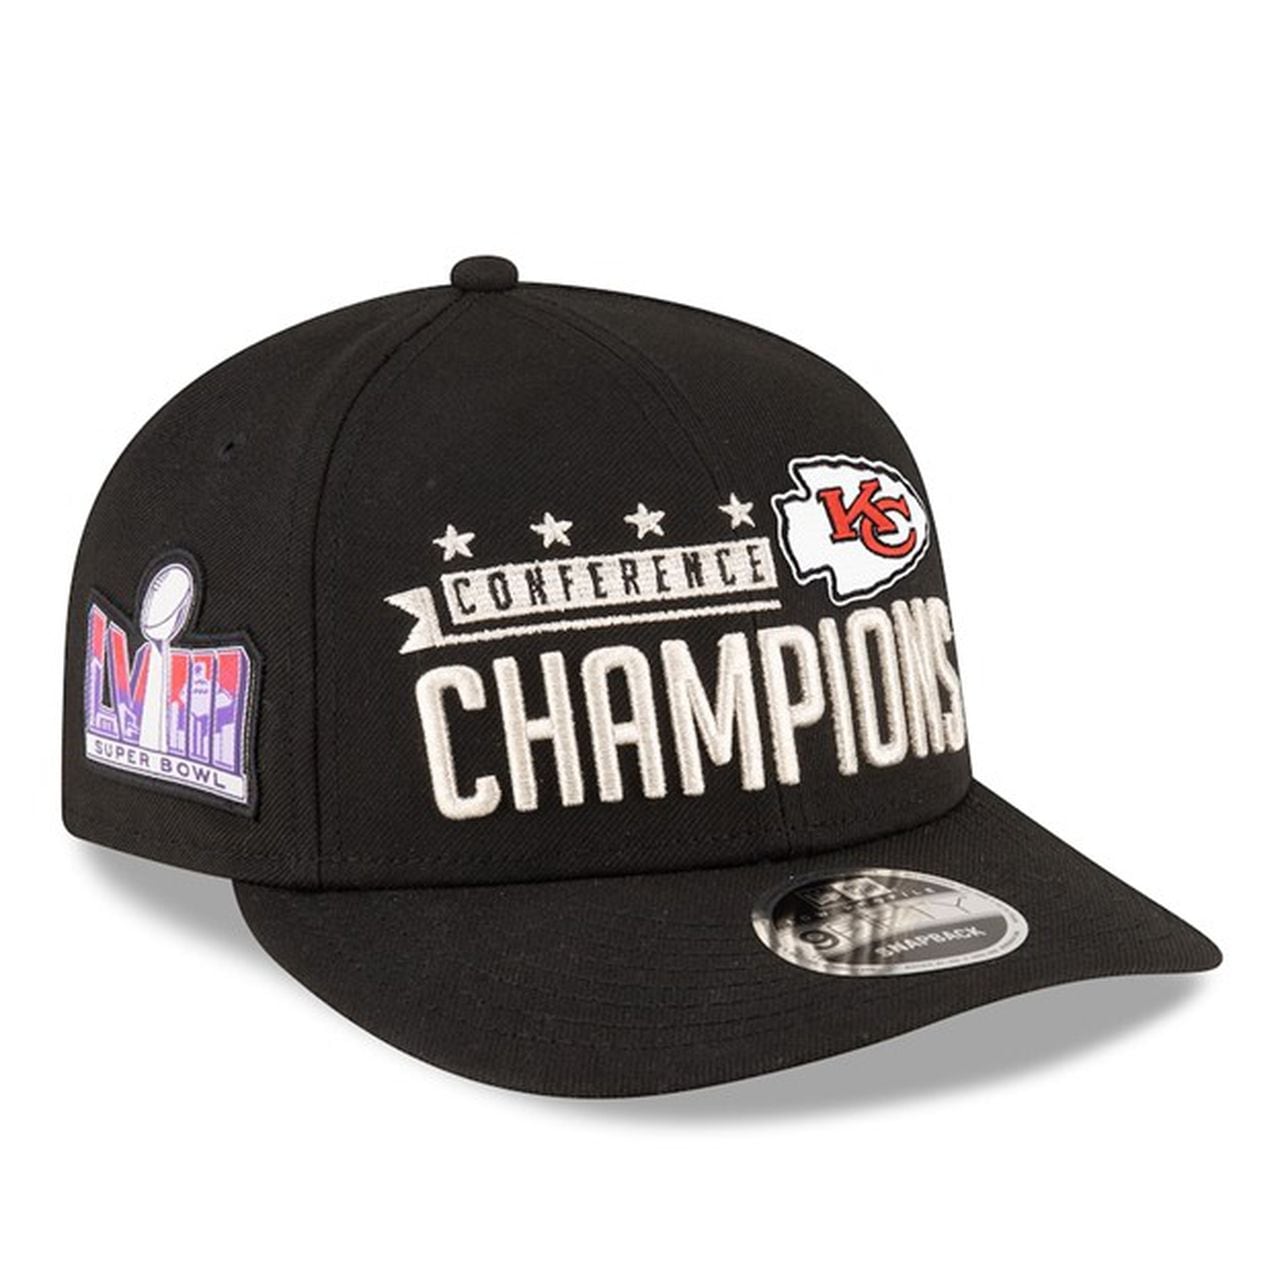 Kansas City Chiefs New Era AFC Champions locker room snapback hat for $35.99 from Fanatics.